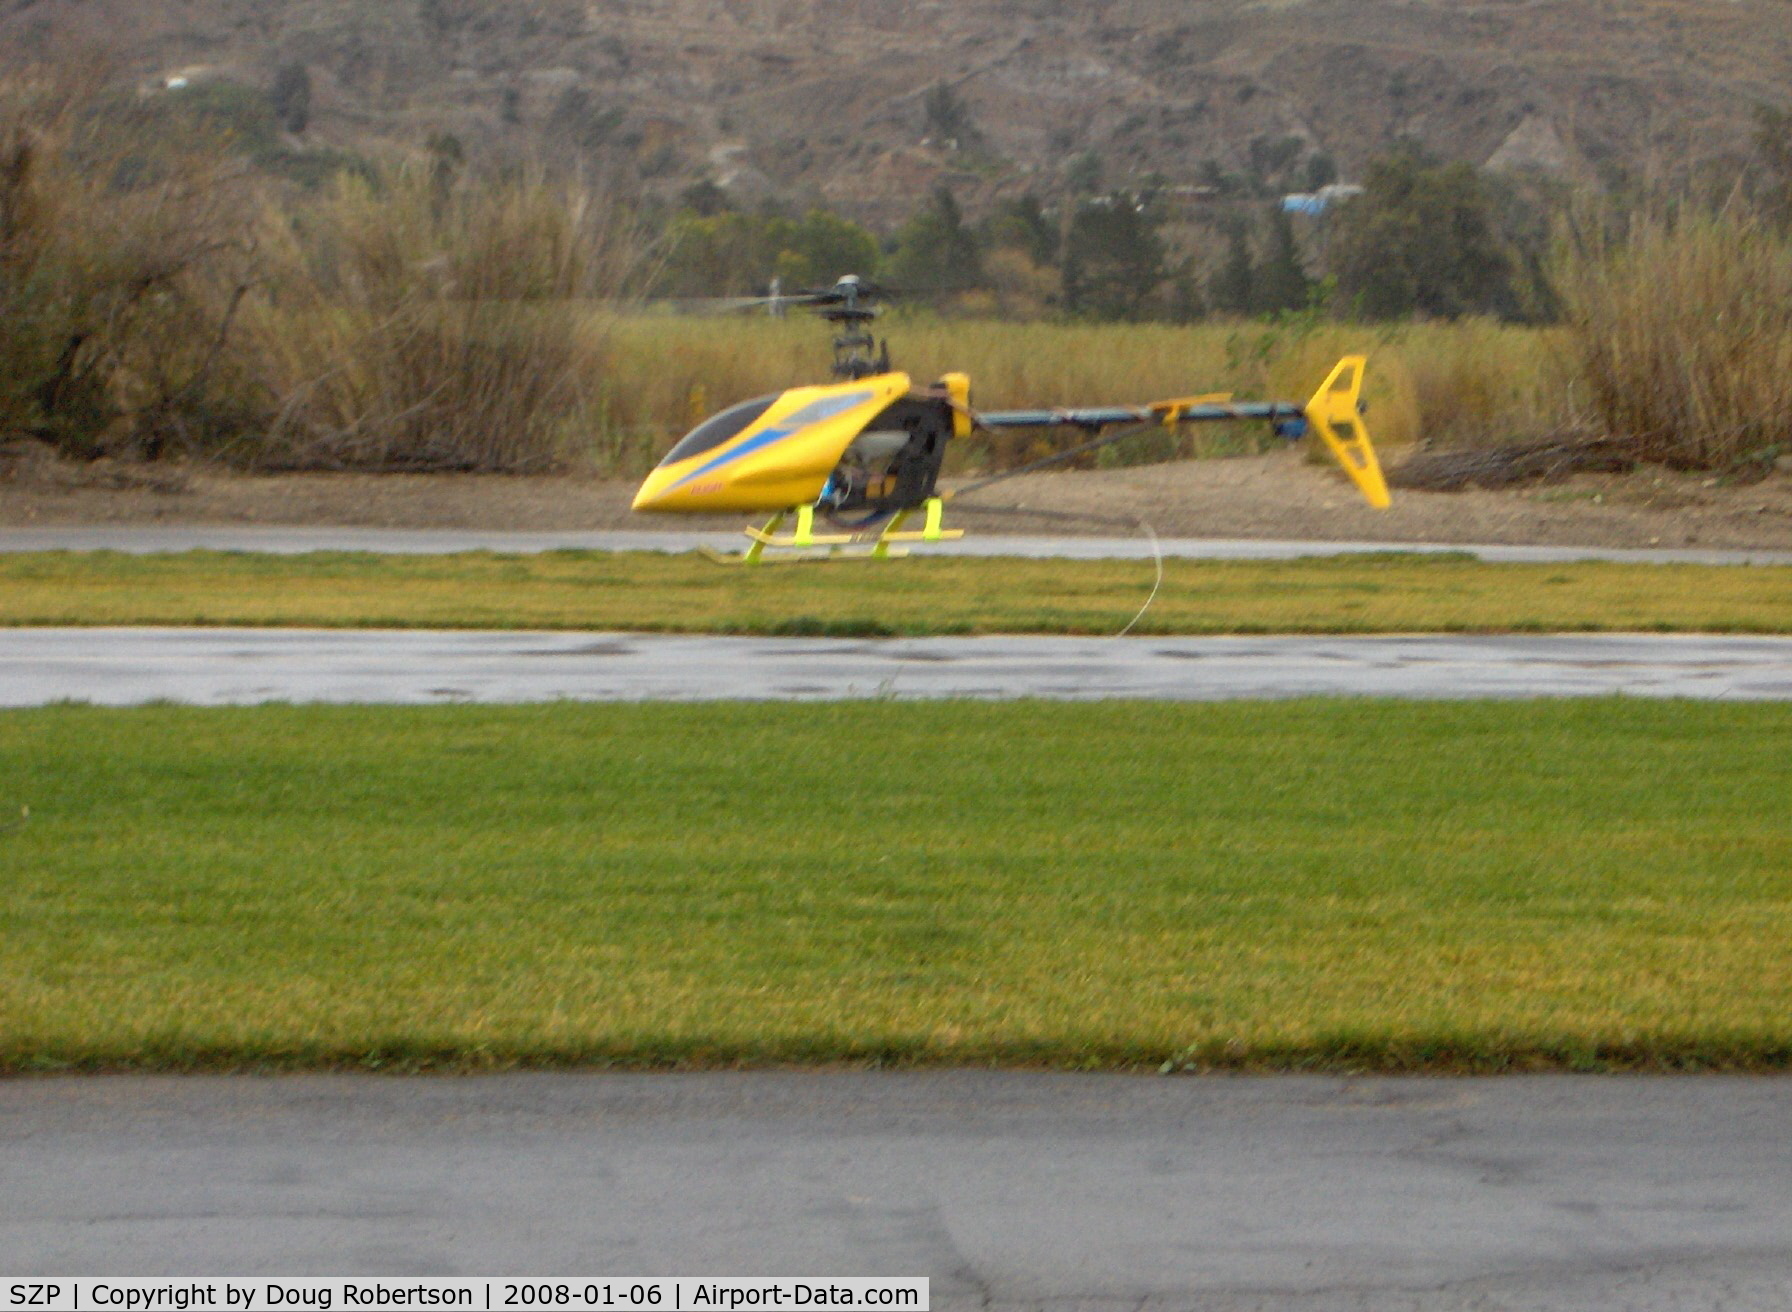 Santa Paula Airport (SZP) - Rick's RC drone T-REX helicopter